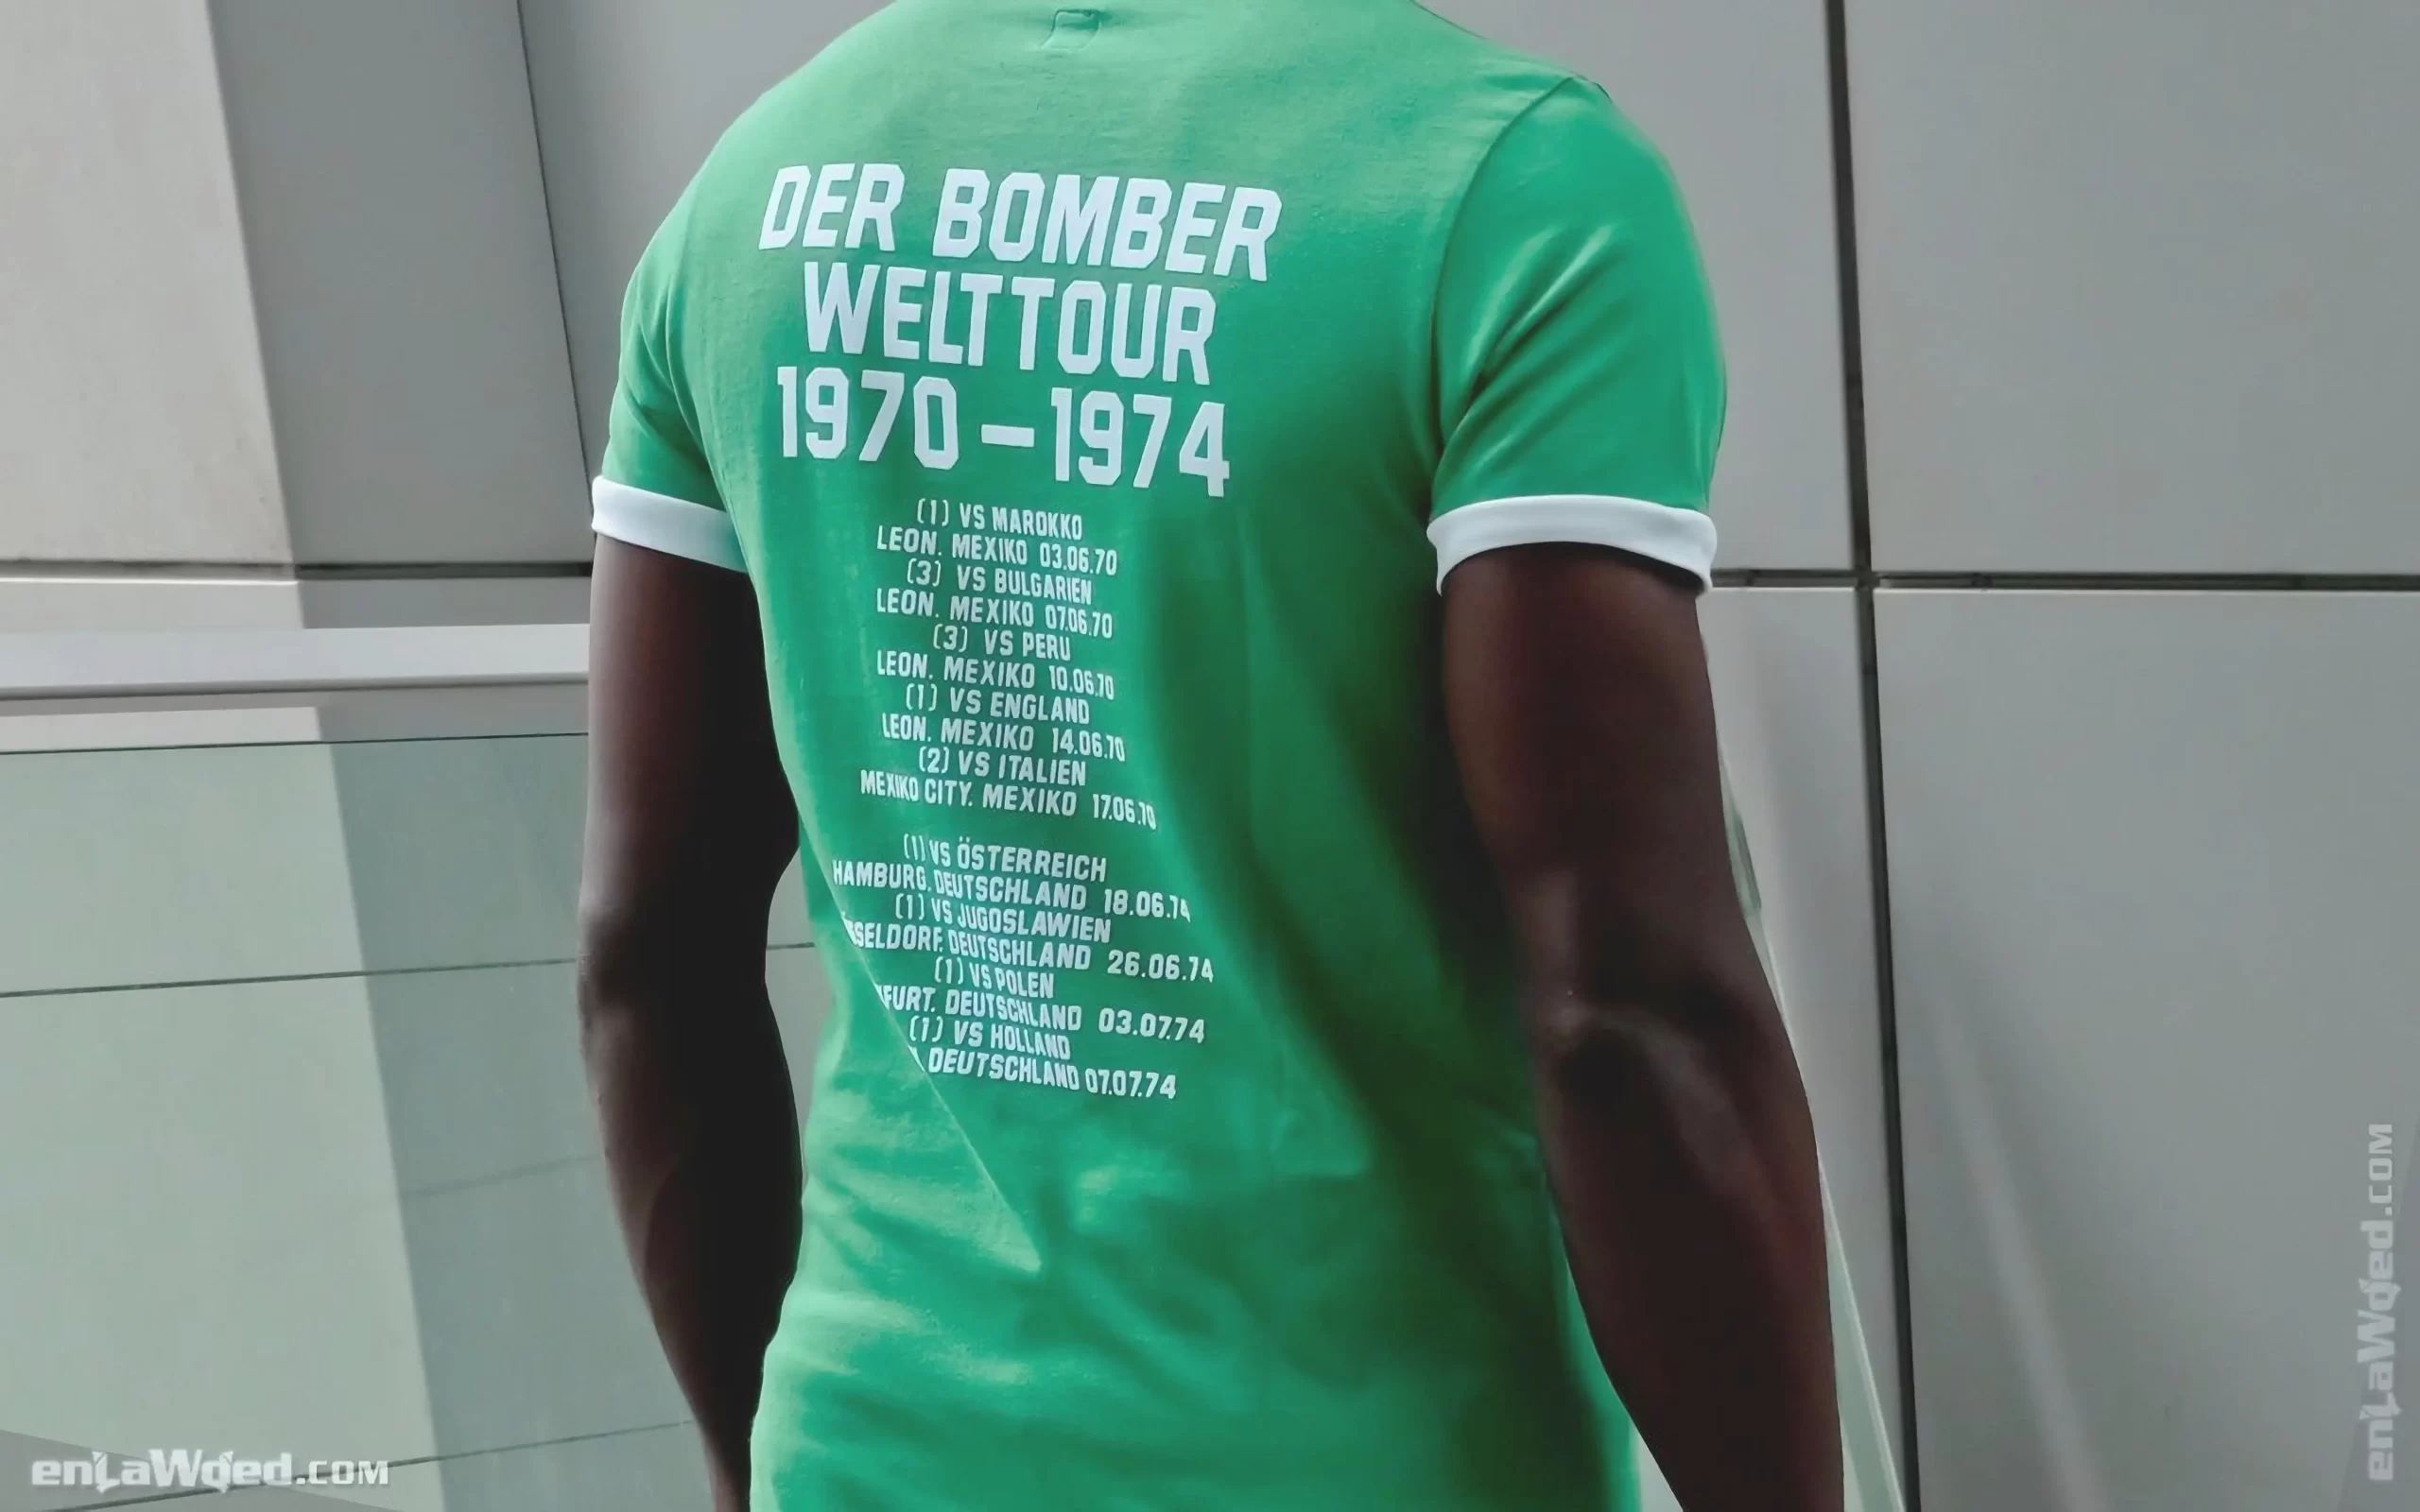 Men’s 2006 Der Bomber ’70 T-shirt by Adidas Originals: Energetic (EnLawded.com file #lmc512imdjkpj48uhp)